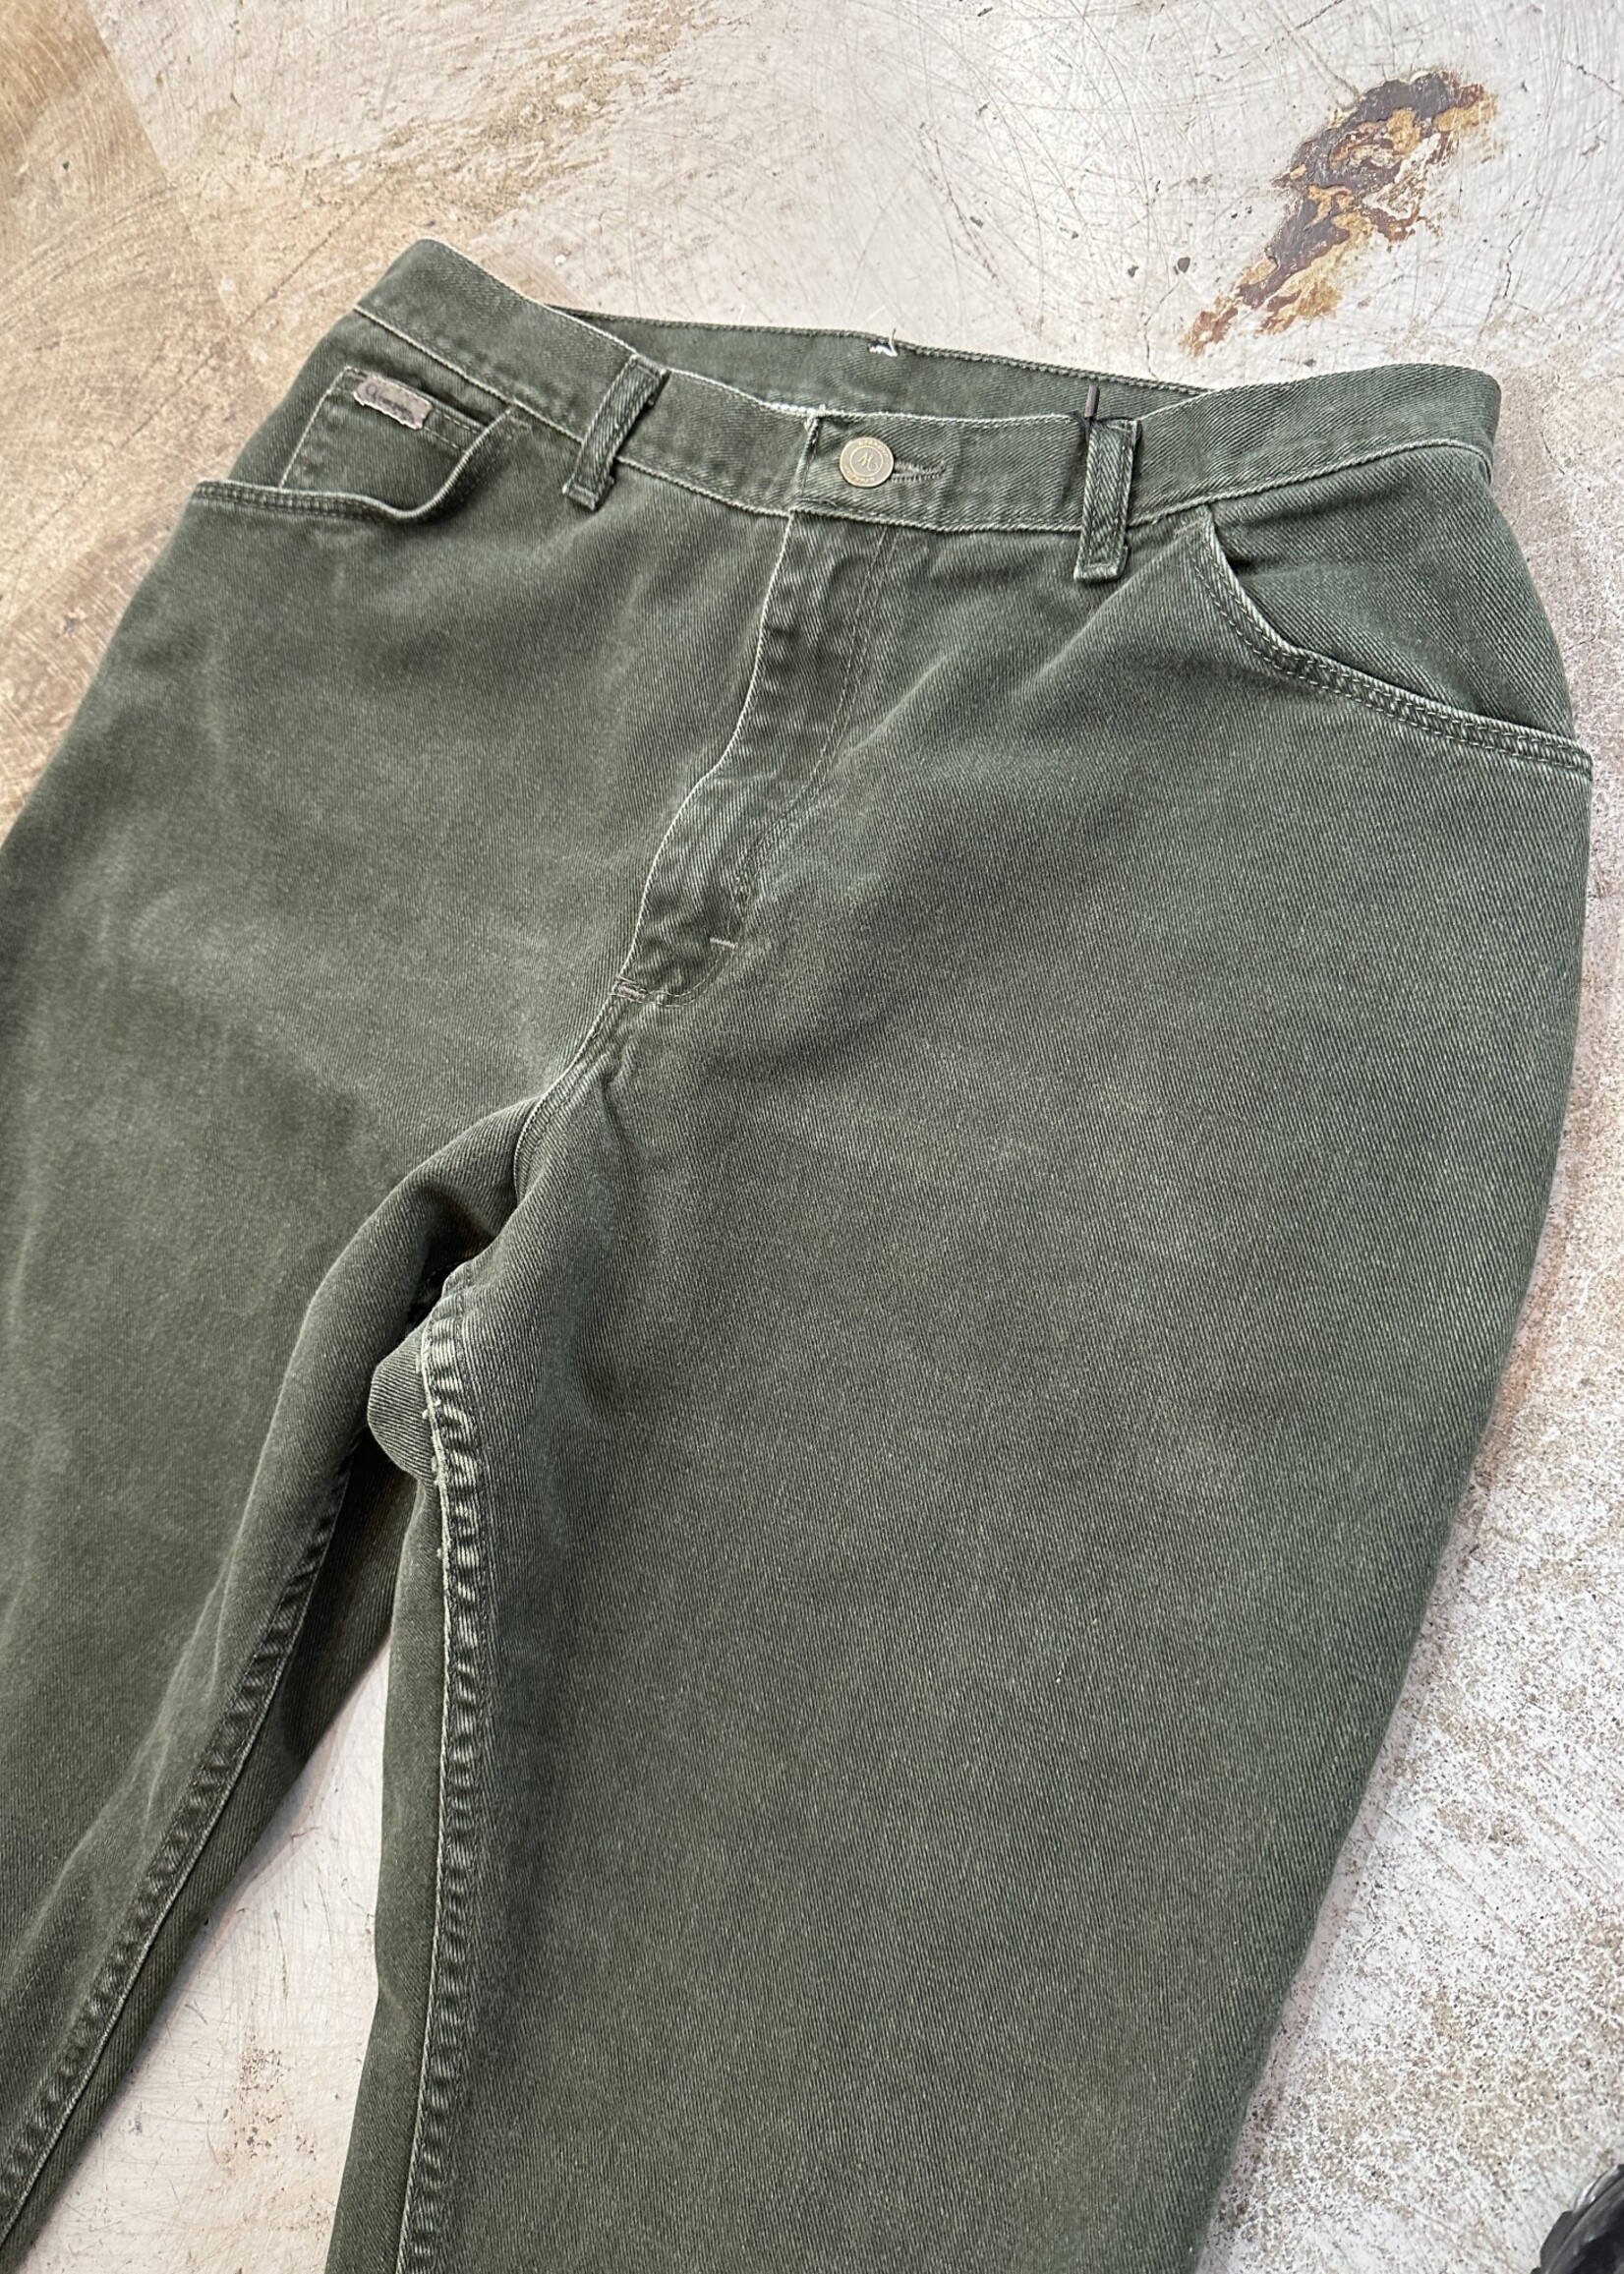 Wrangler Vintage Green Jeans FEM 31"